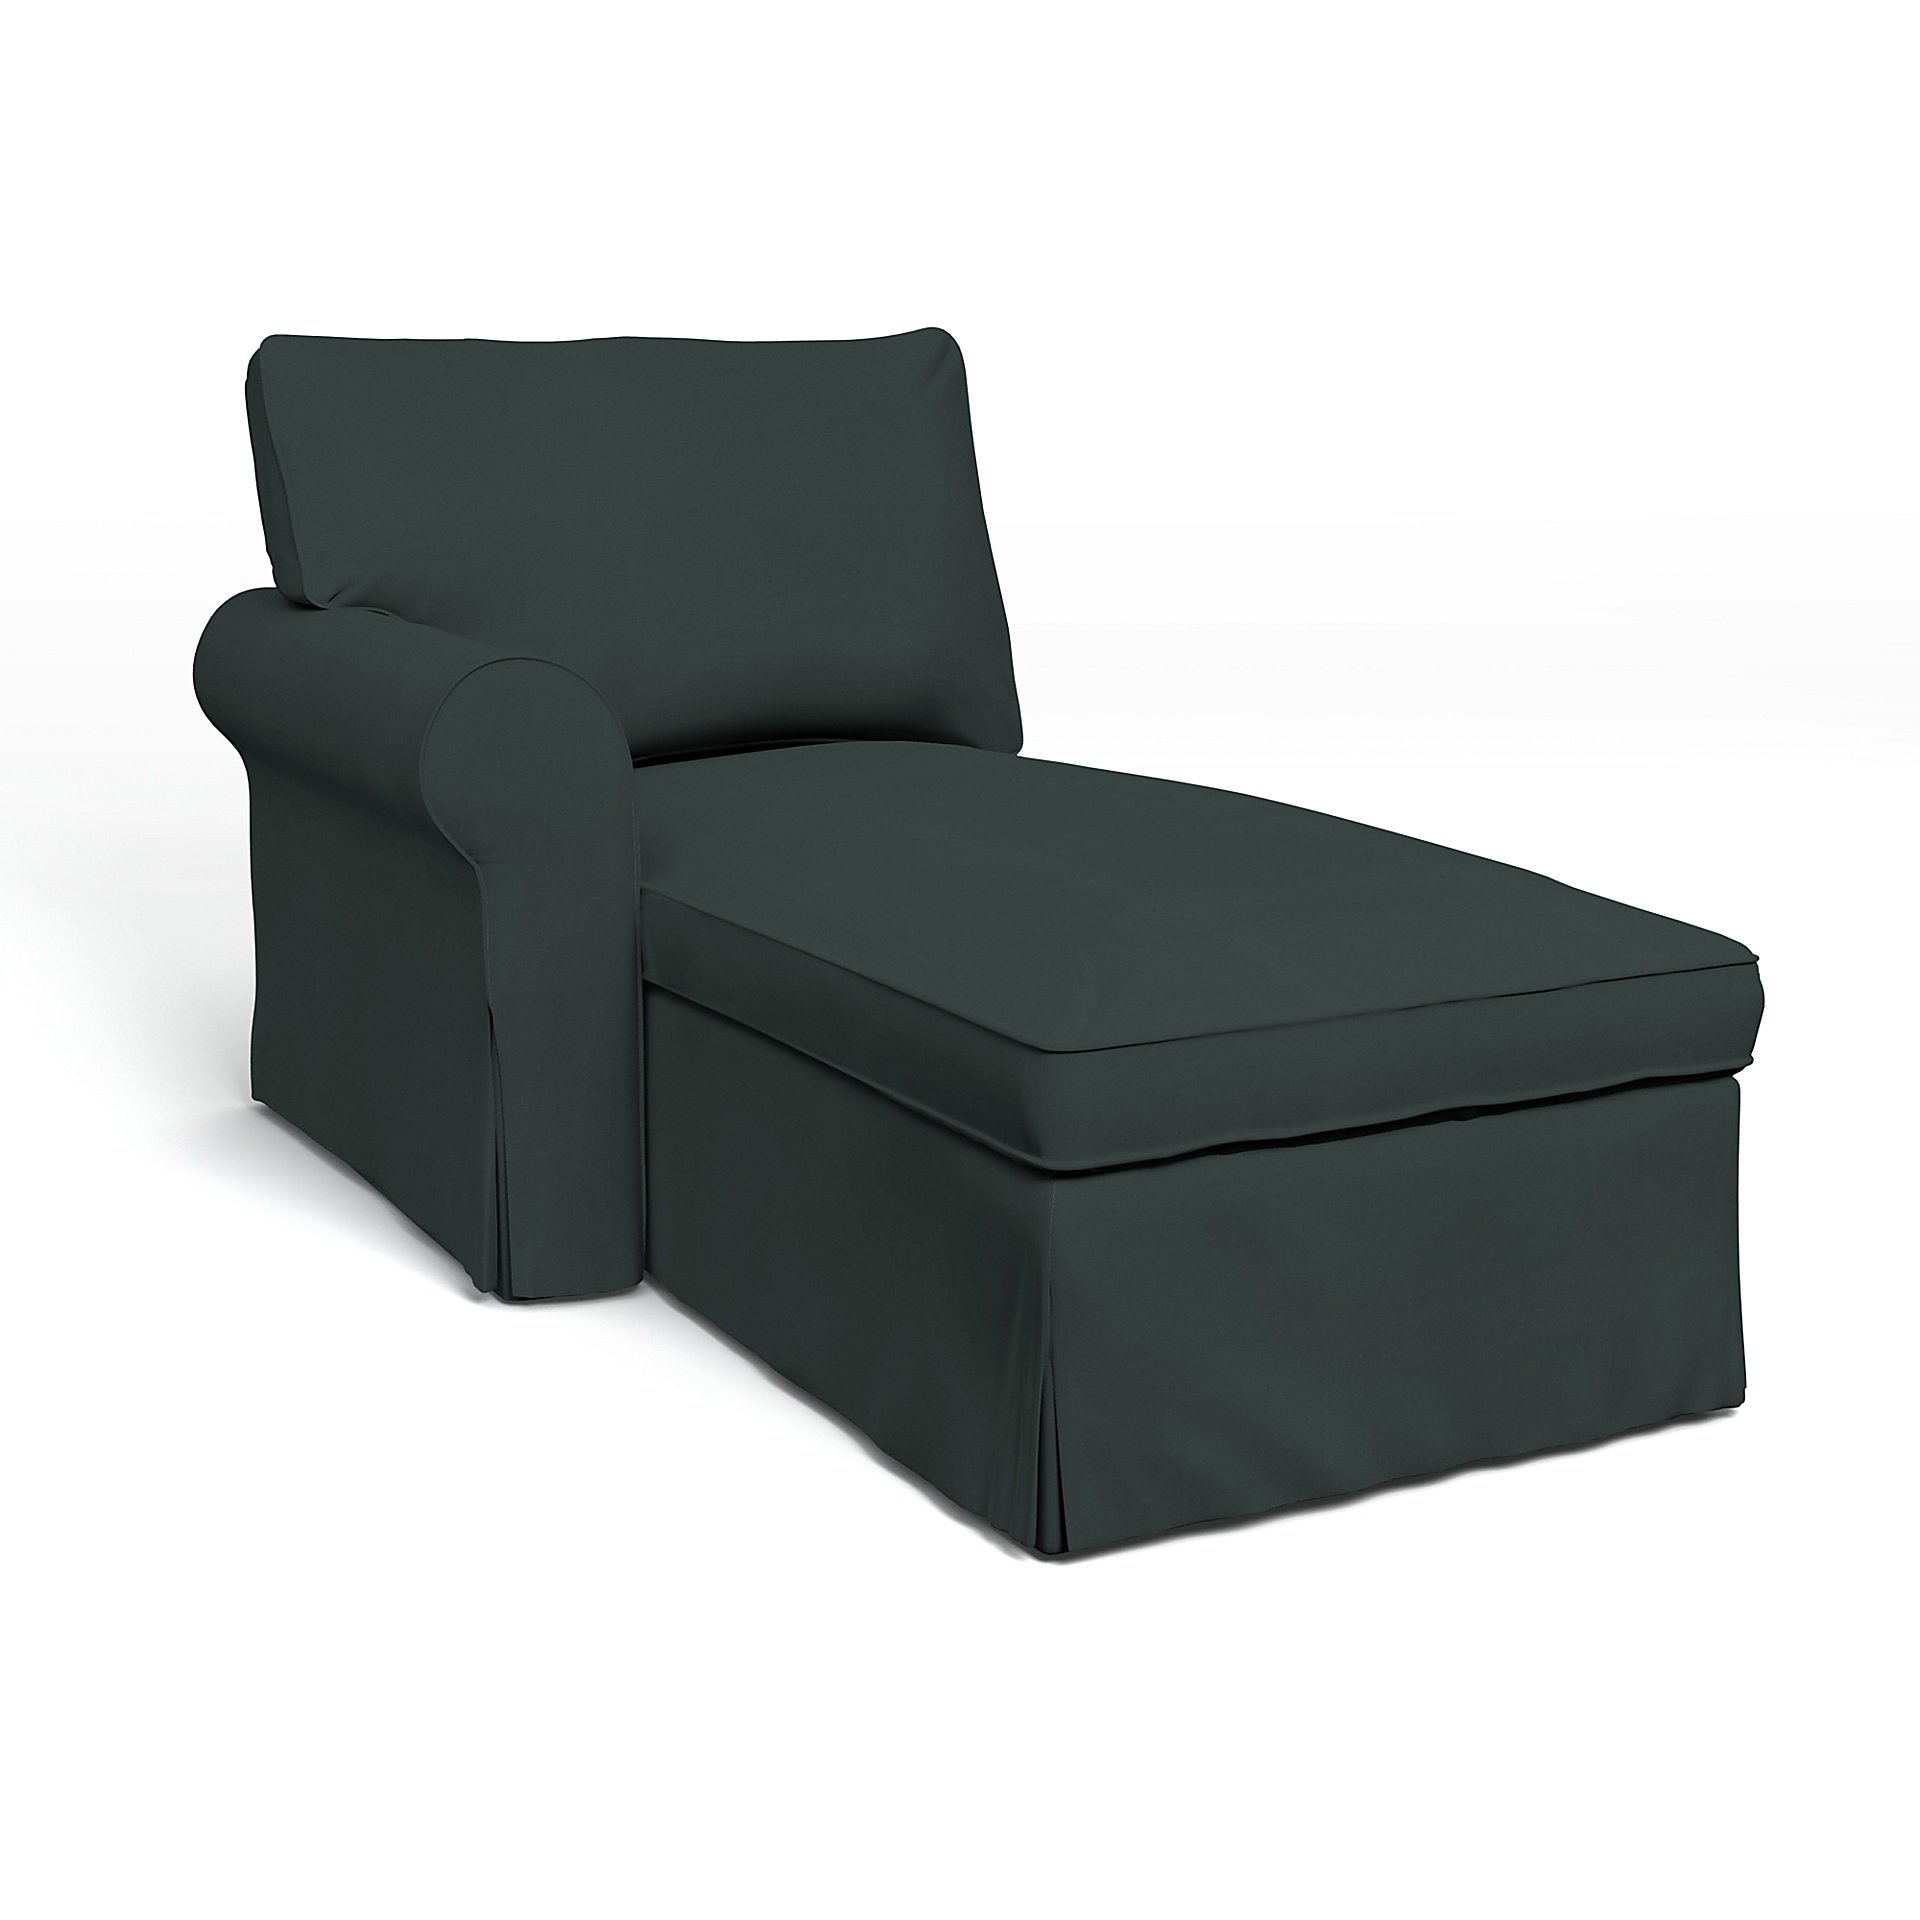 IKEA - Ektorp Chaise with Left Armrest Cover, Graphite Grey, Cotton - Bemz